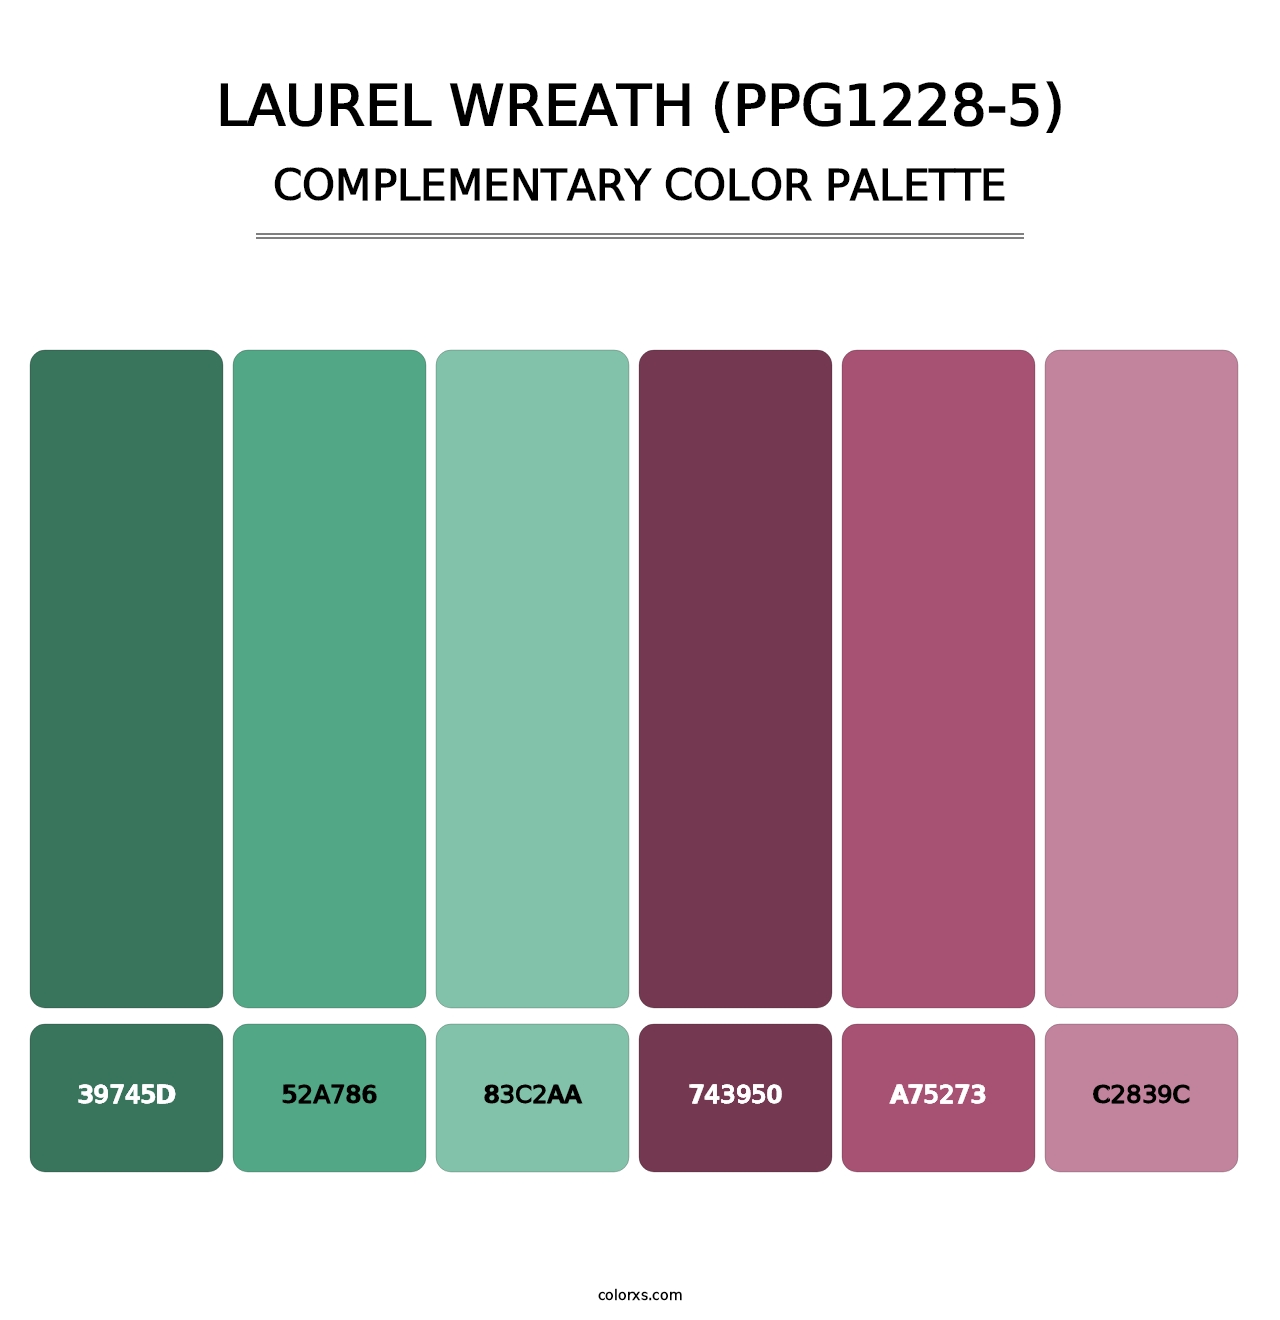 Laurel Wreath (PPG1228-5) - Complementary Color Palette